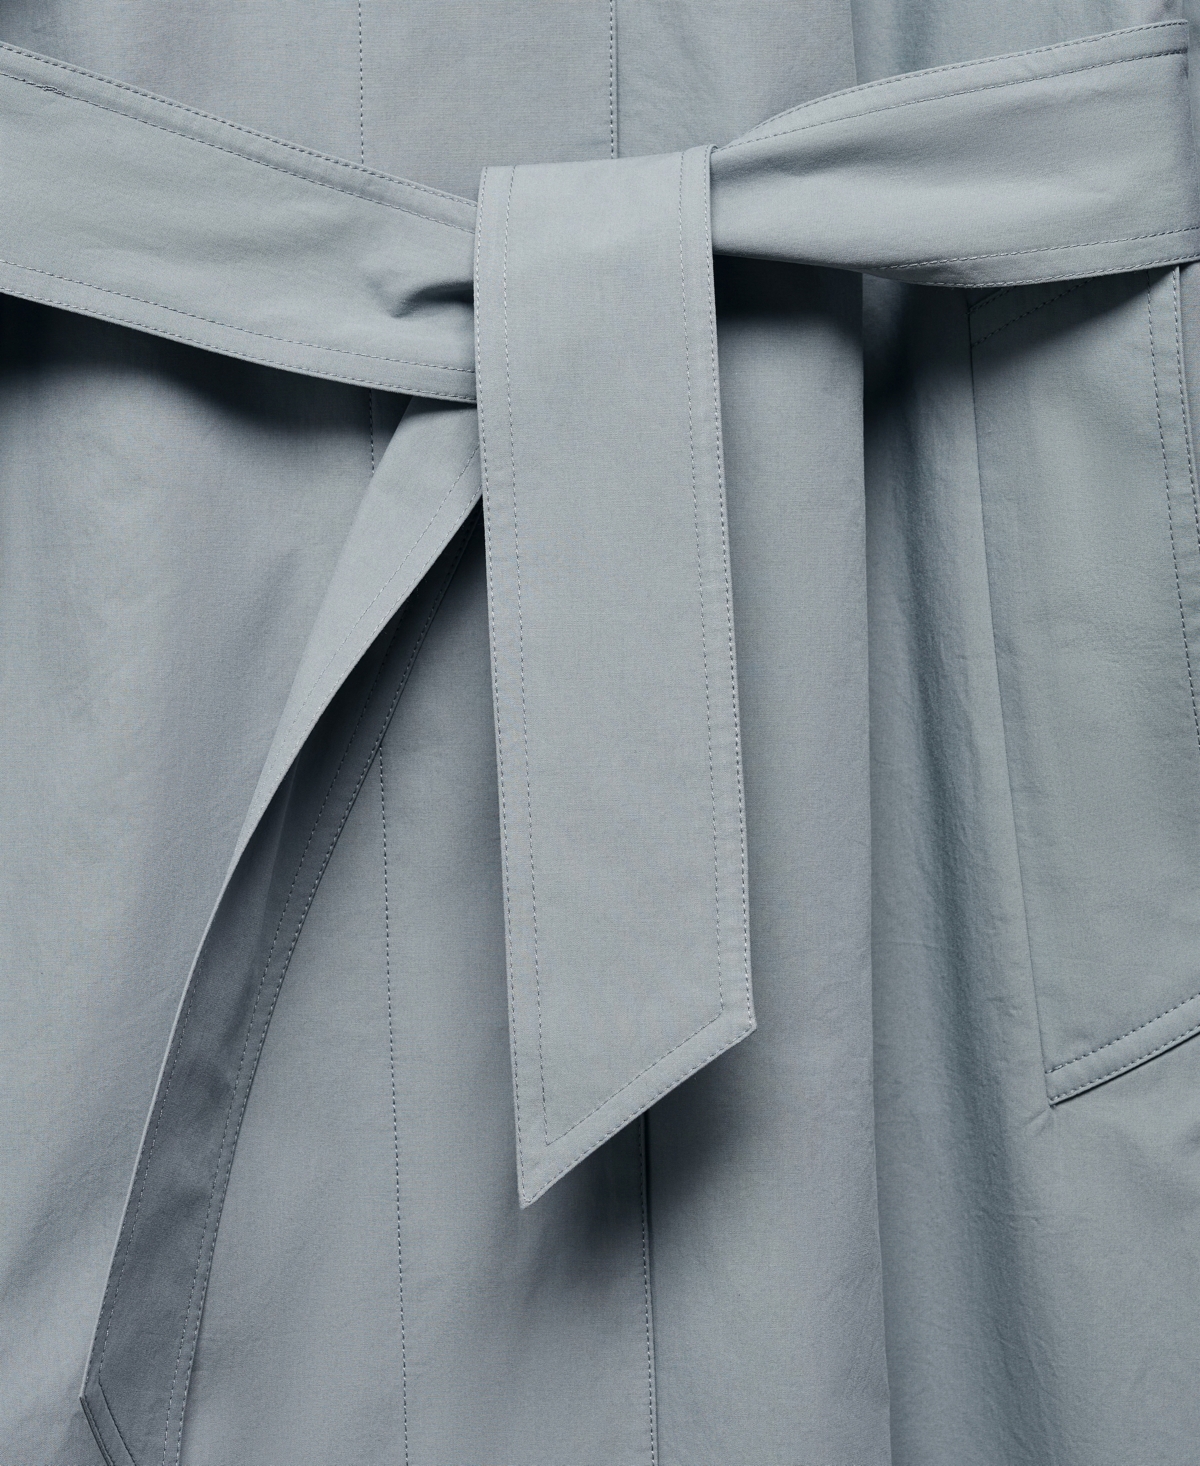 Shop Mango Women's Belted Cotton Trench Coat In Medium Blue